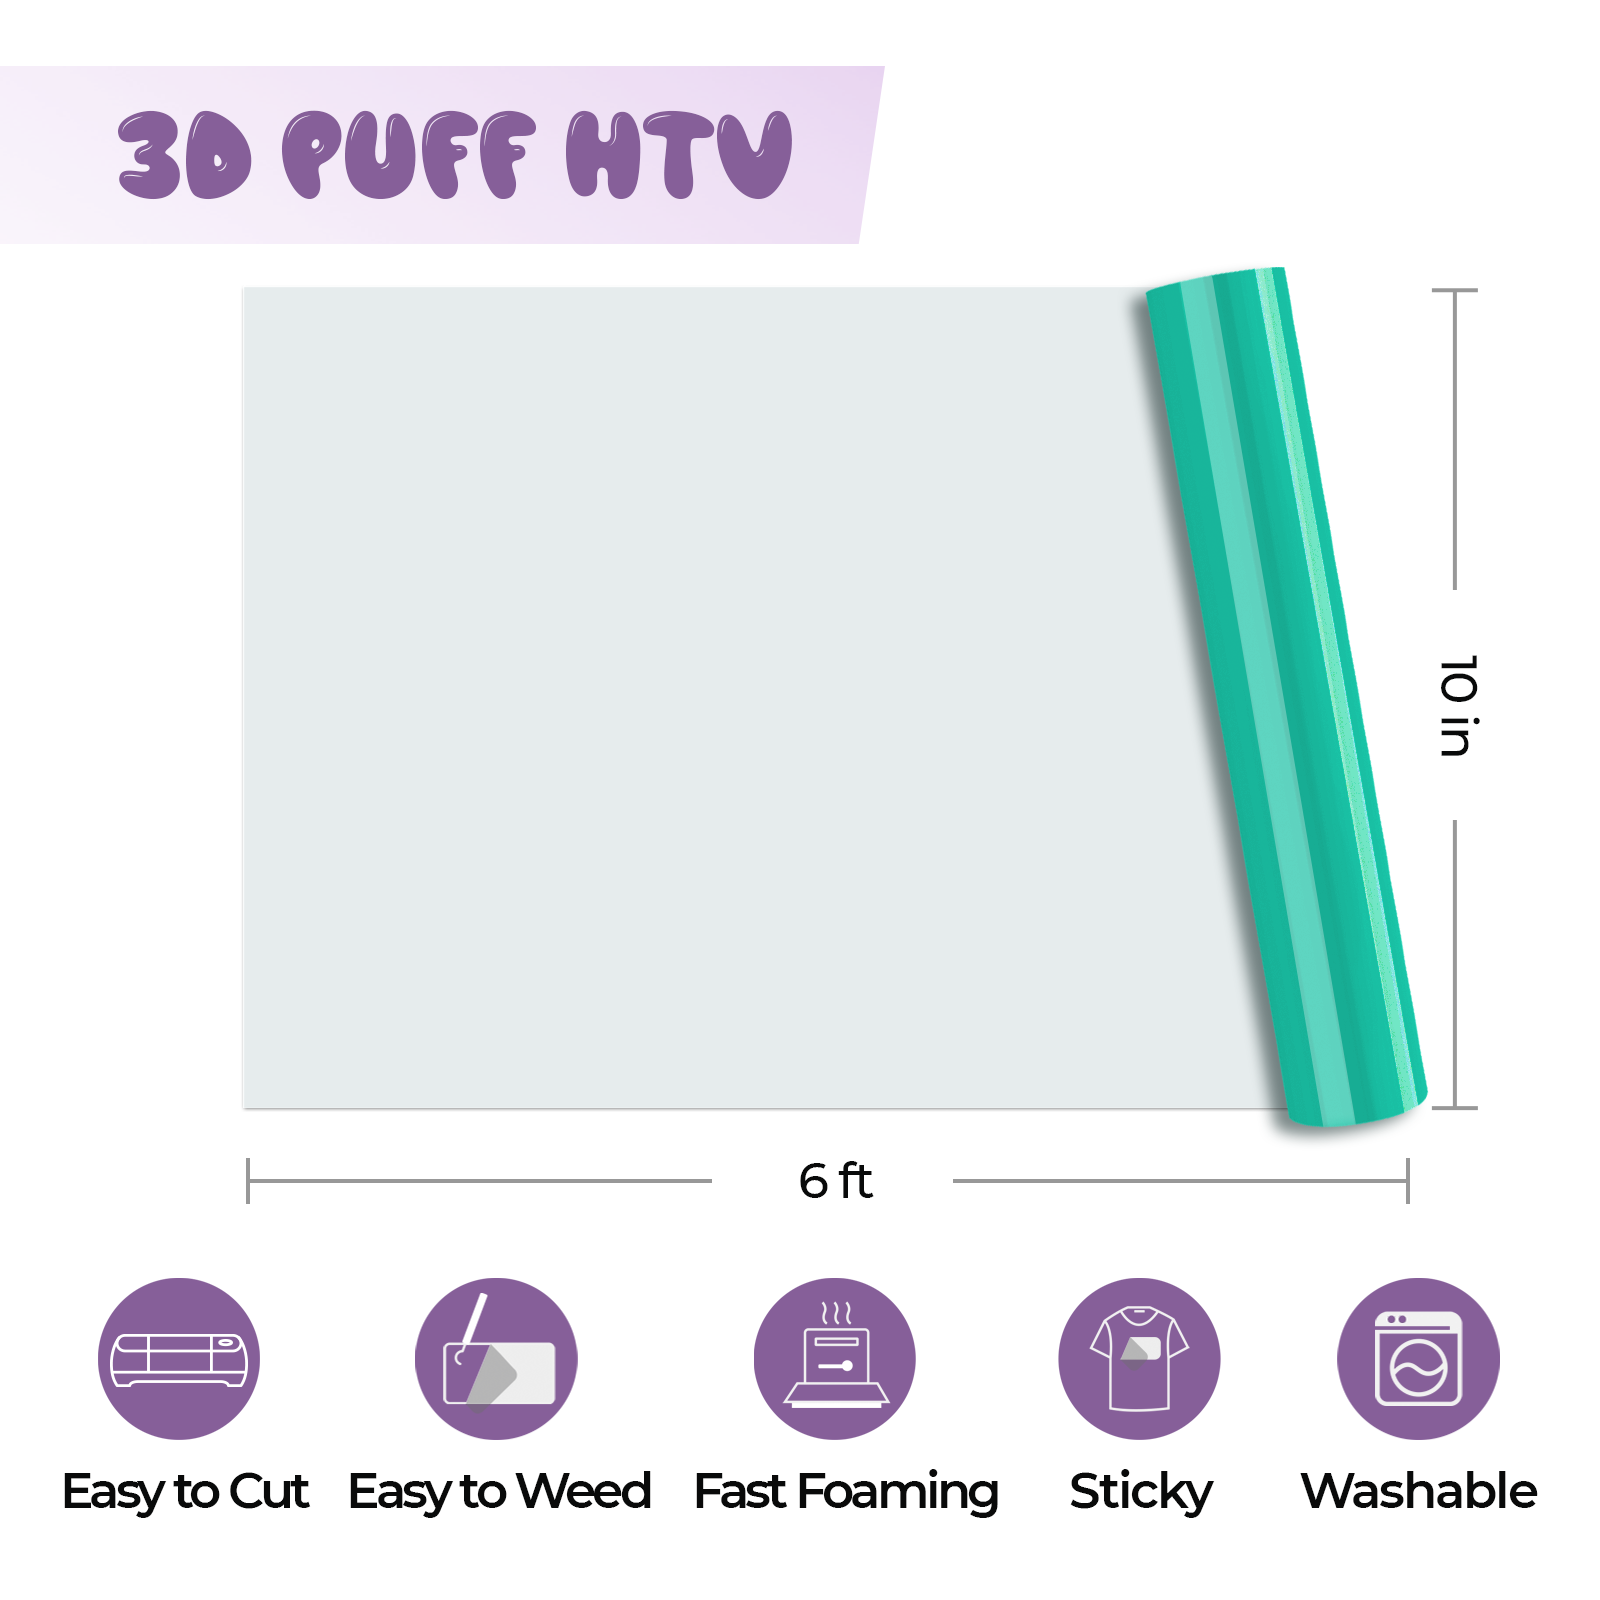 Siser Glitter HTV Iron on Heat Transfer Vinyl 10 inch x 12 inch 6 Precut Sheets - Neon Purple, Size: 10 x 1 Foot